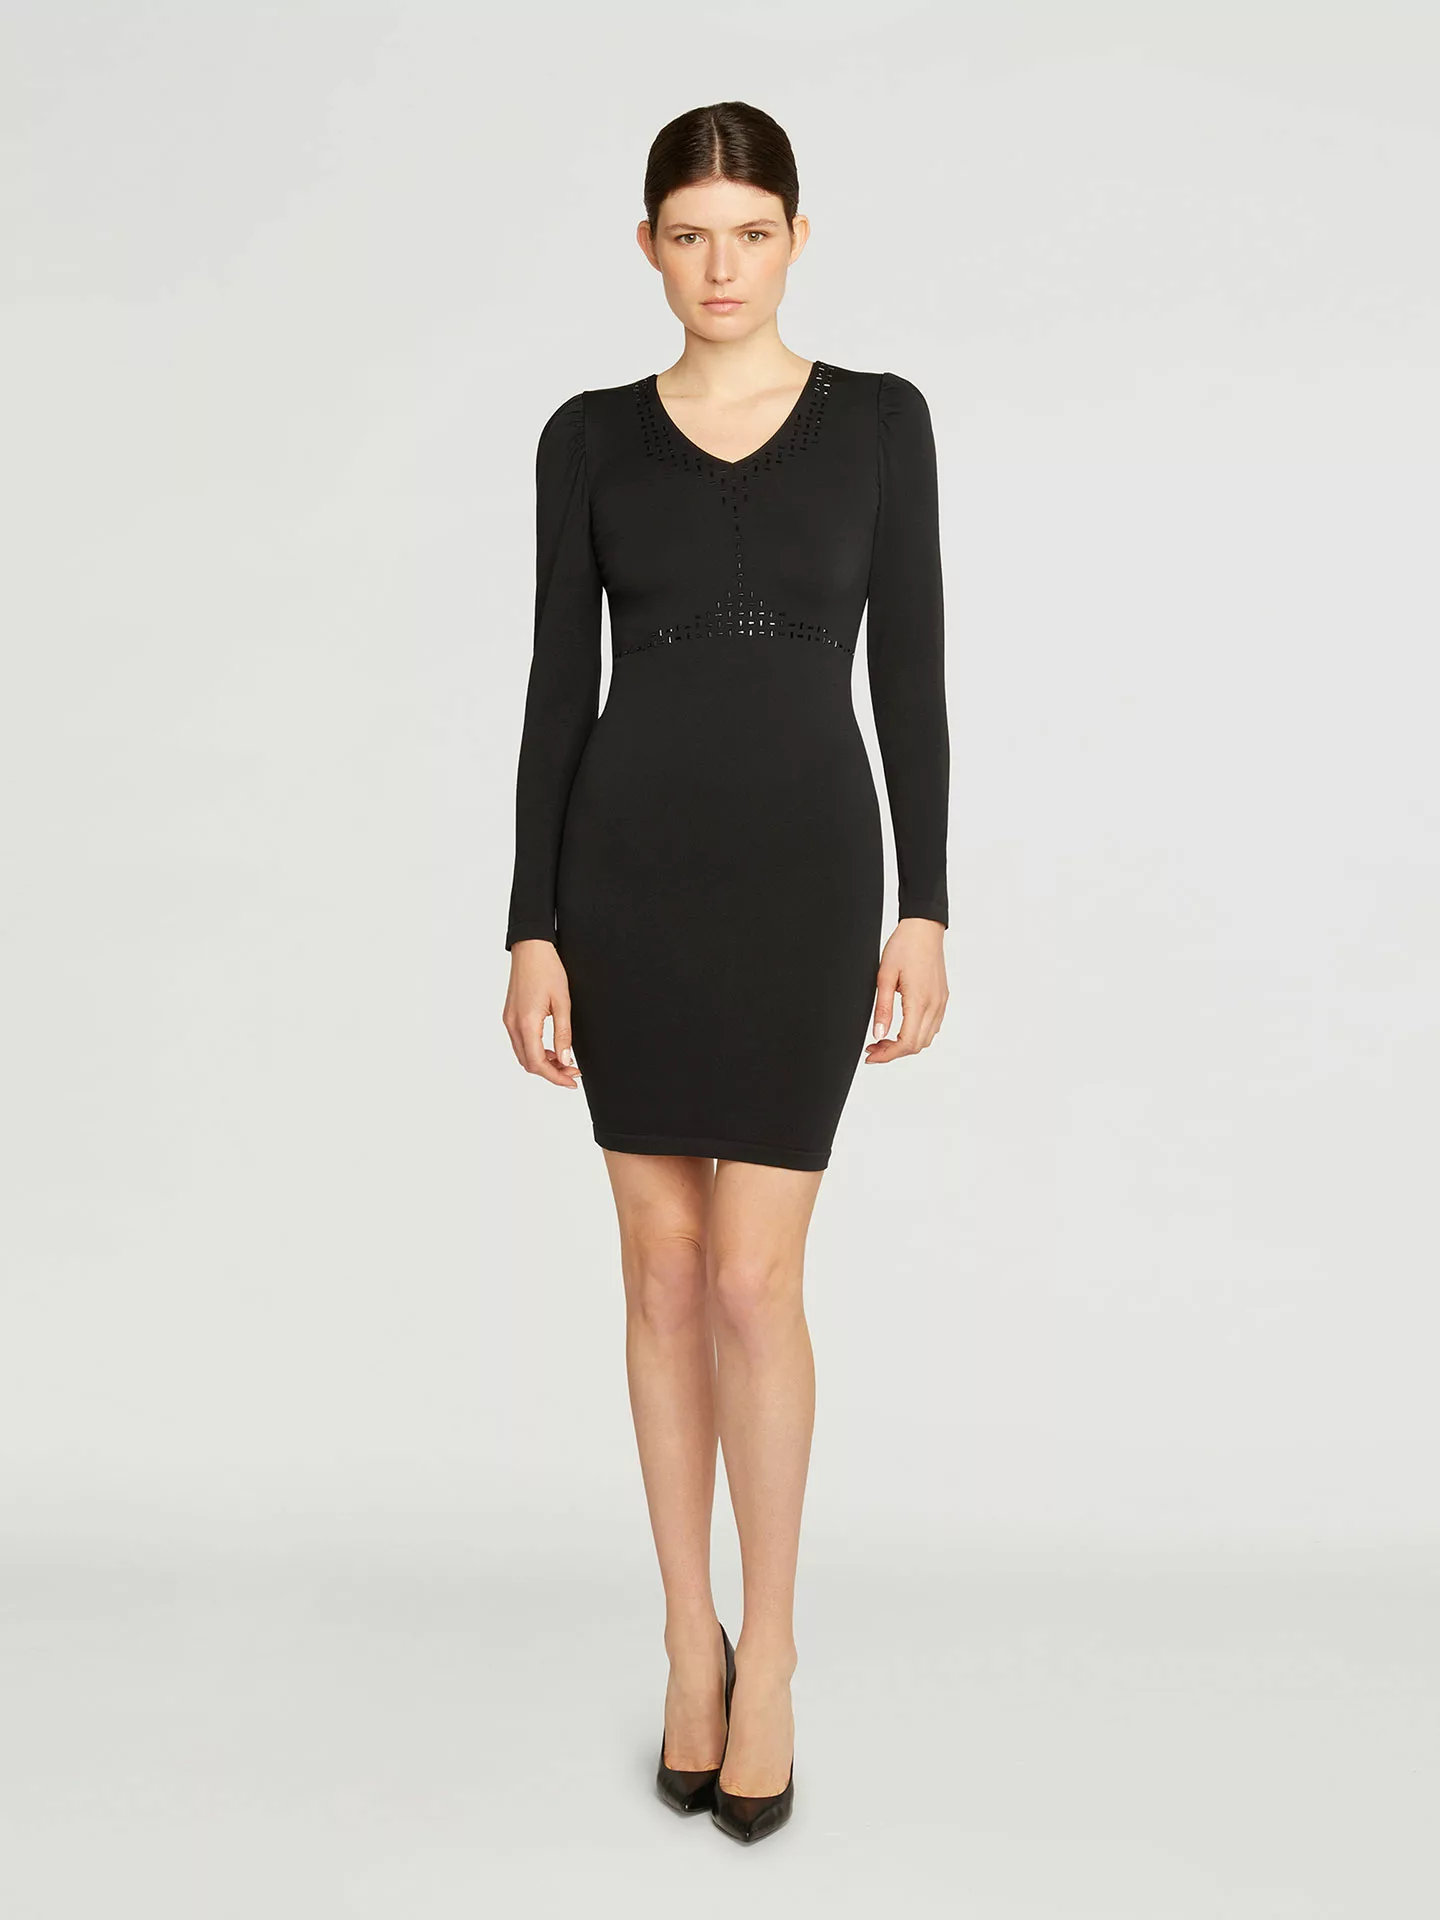 Wolford - Gilda Dress, Frau, black/black, Größe: S günstig online kaufen